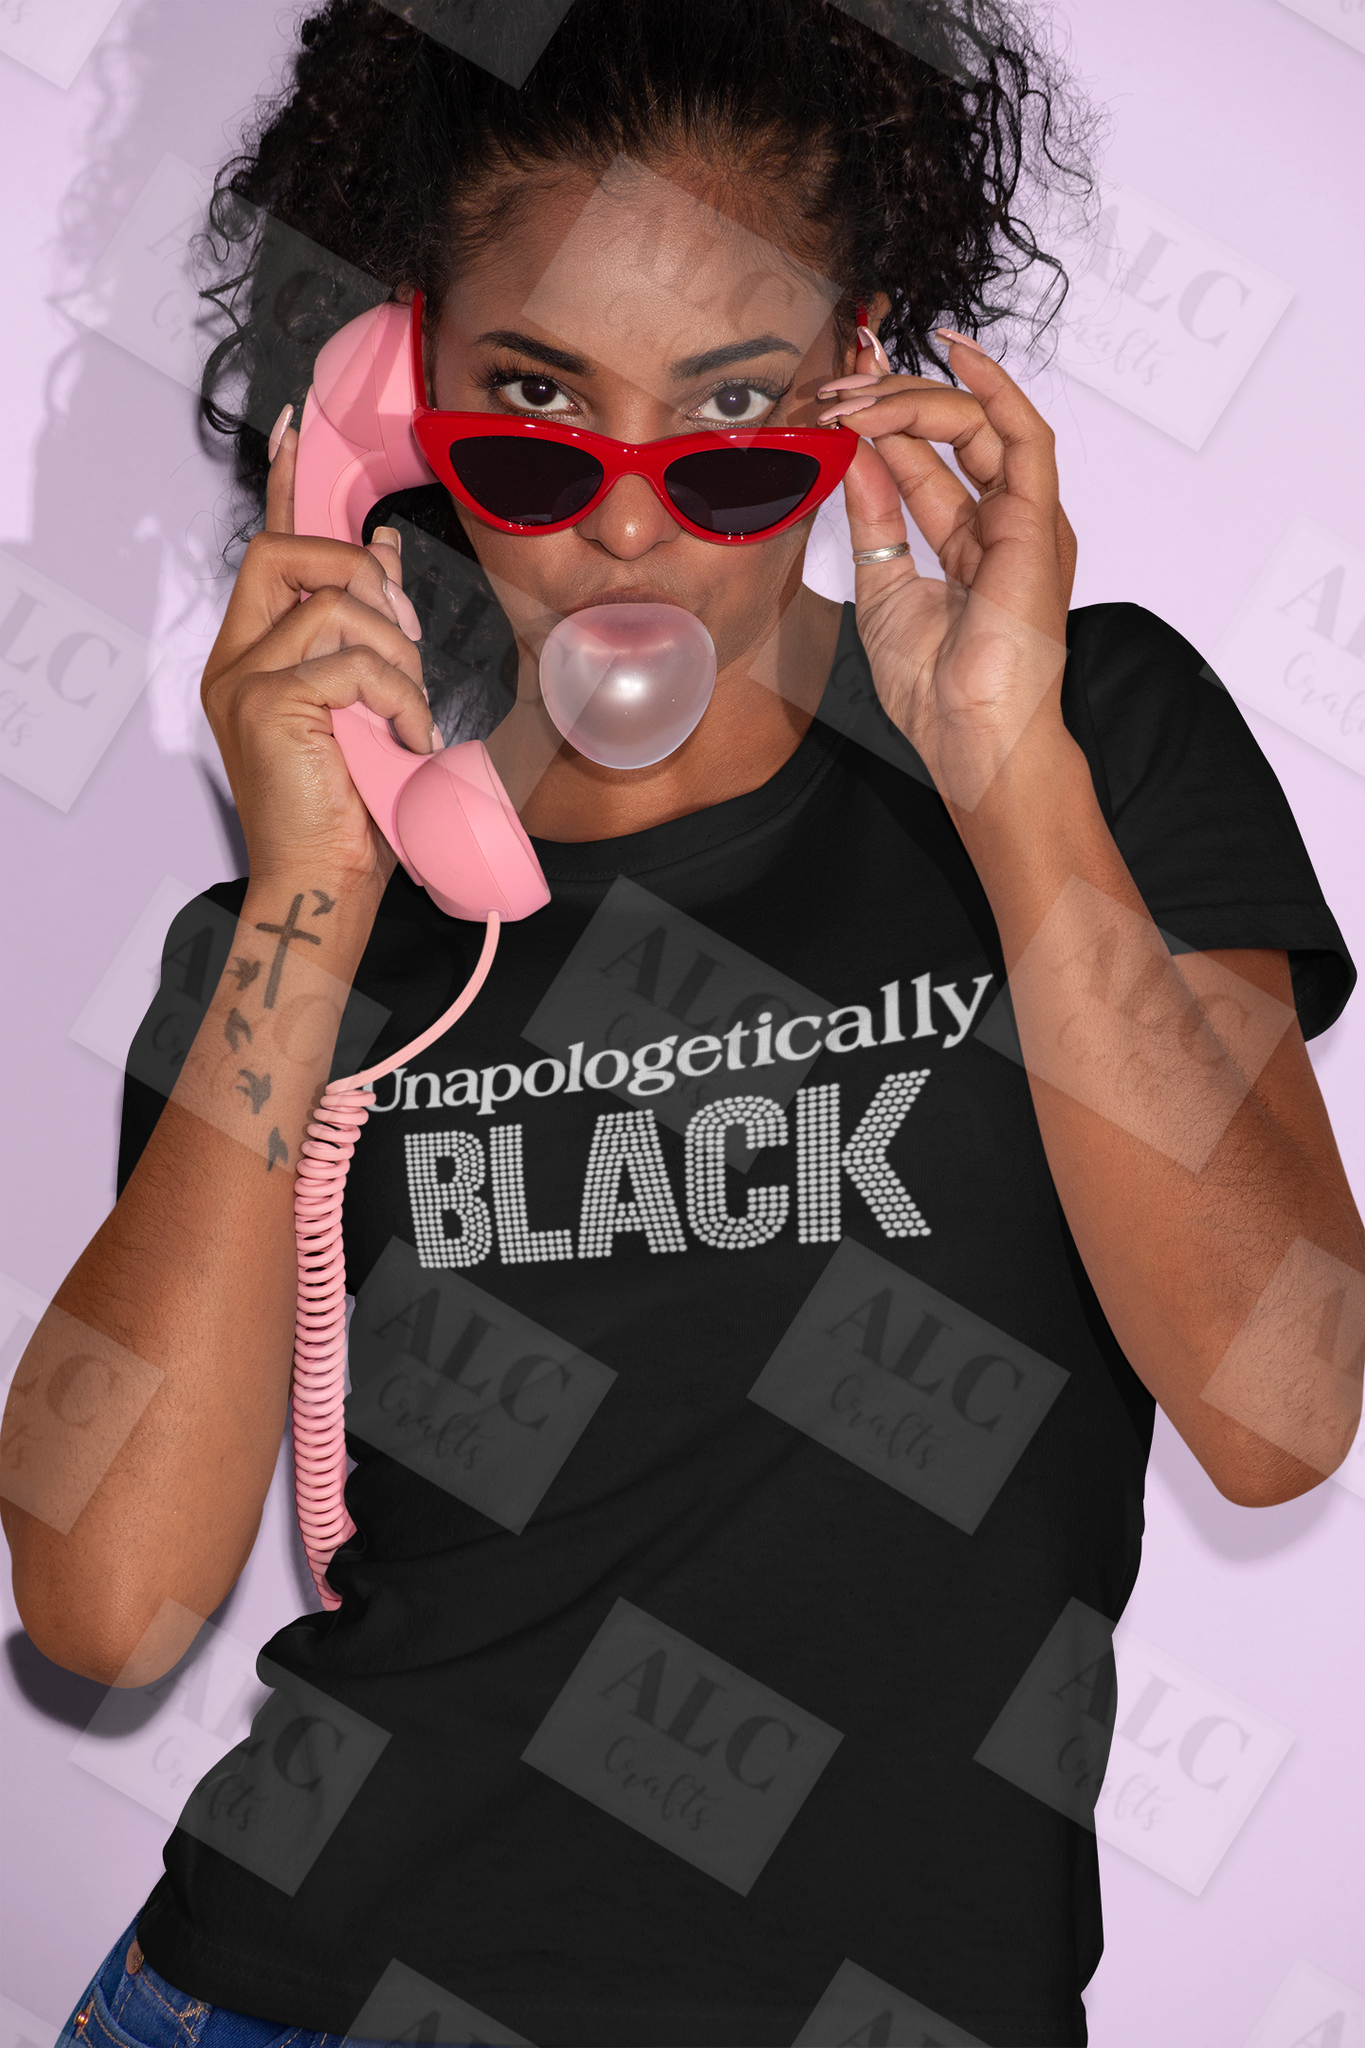 Unapologetically Black HTV & Rhinestone Shirt XXL